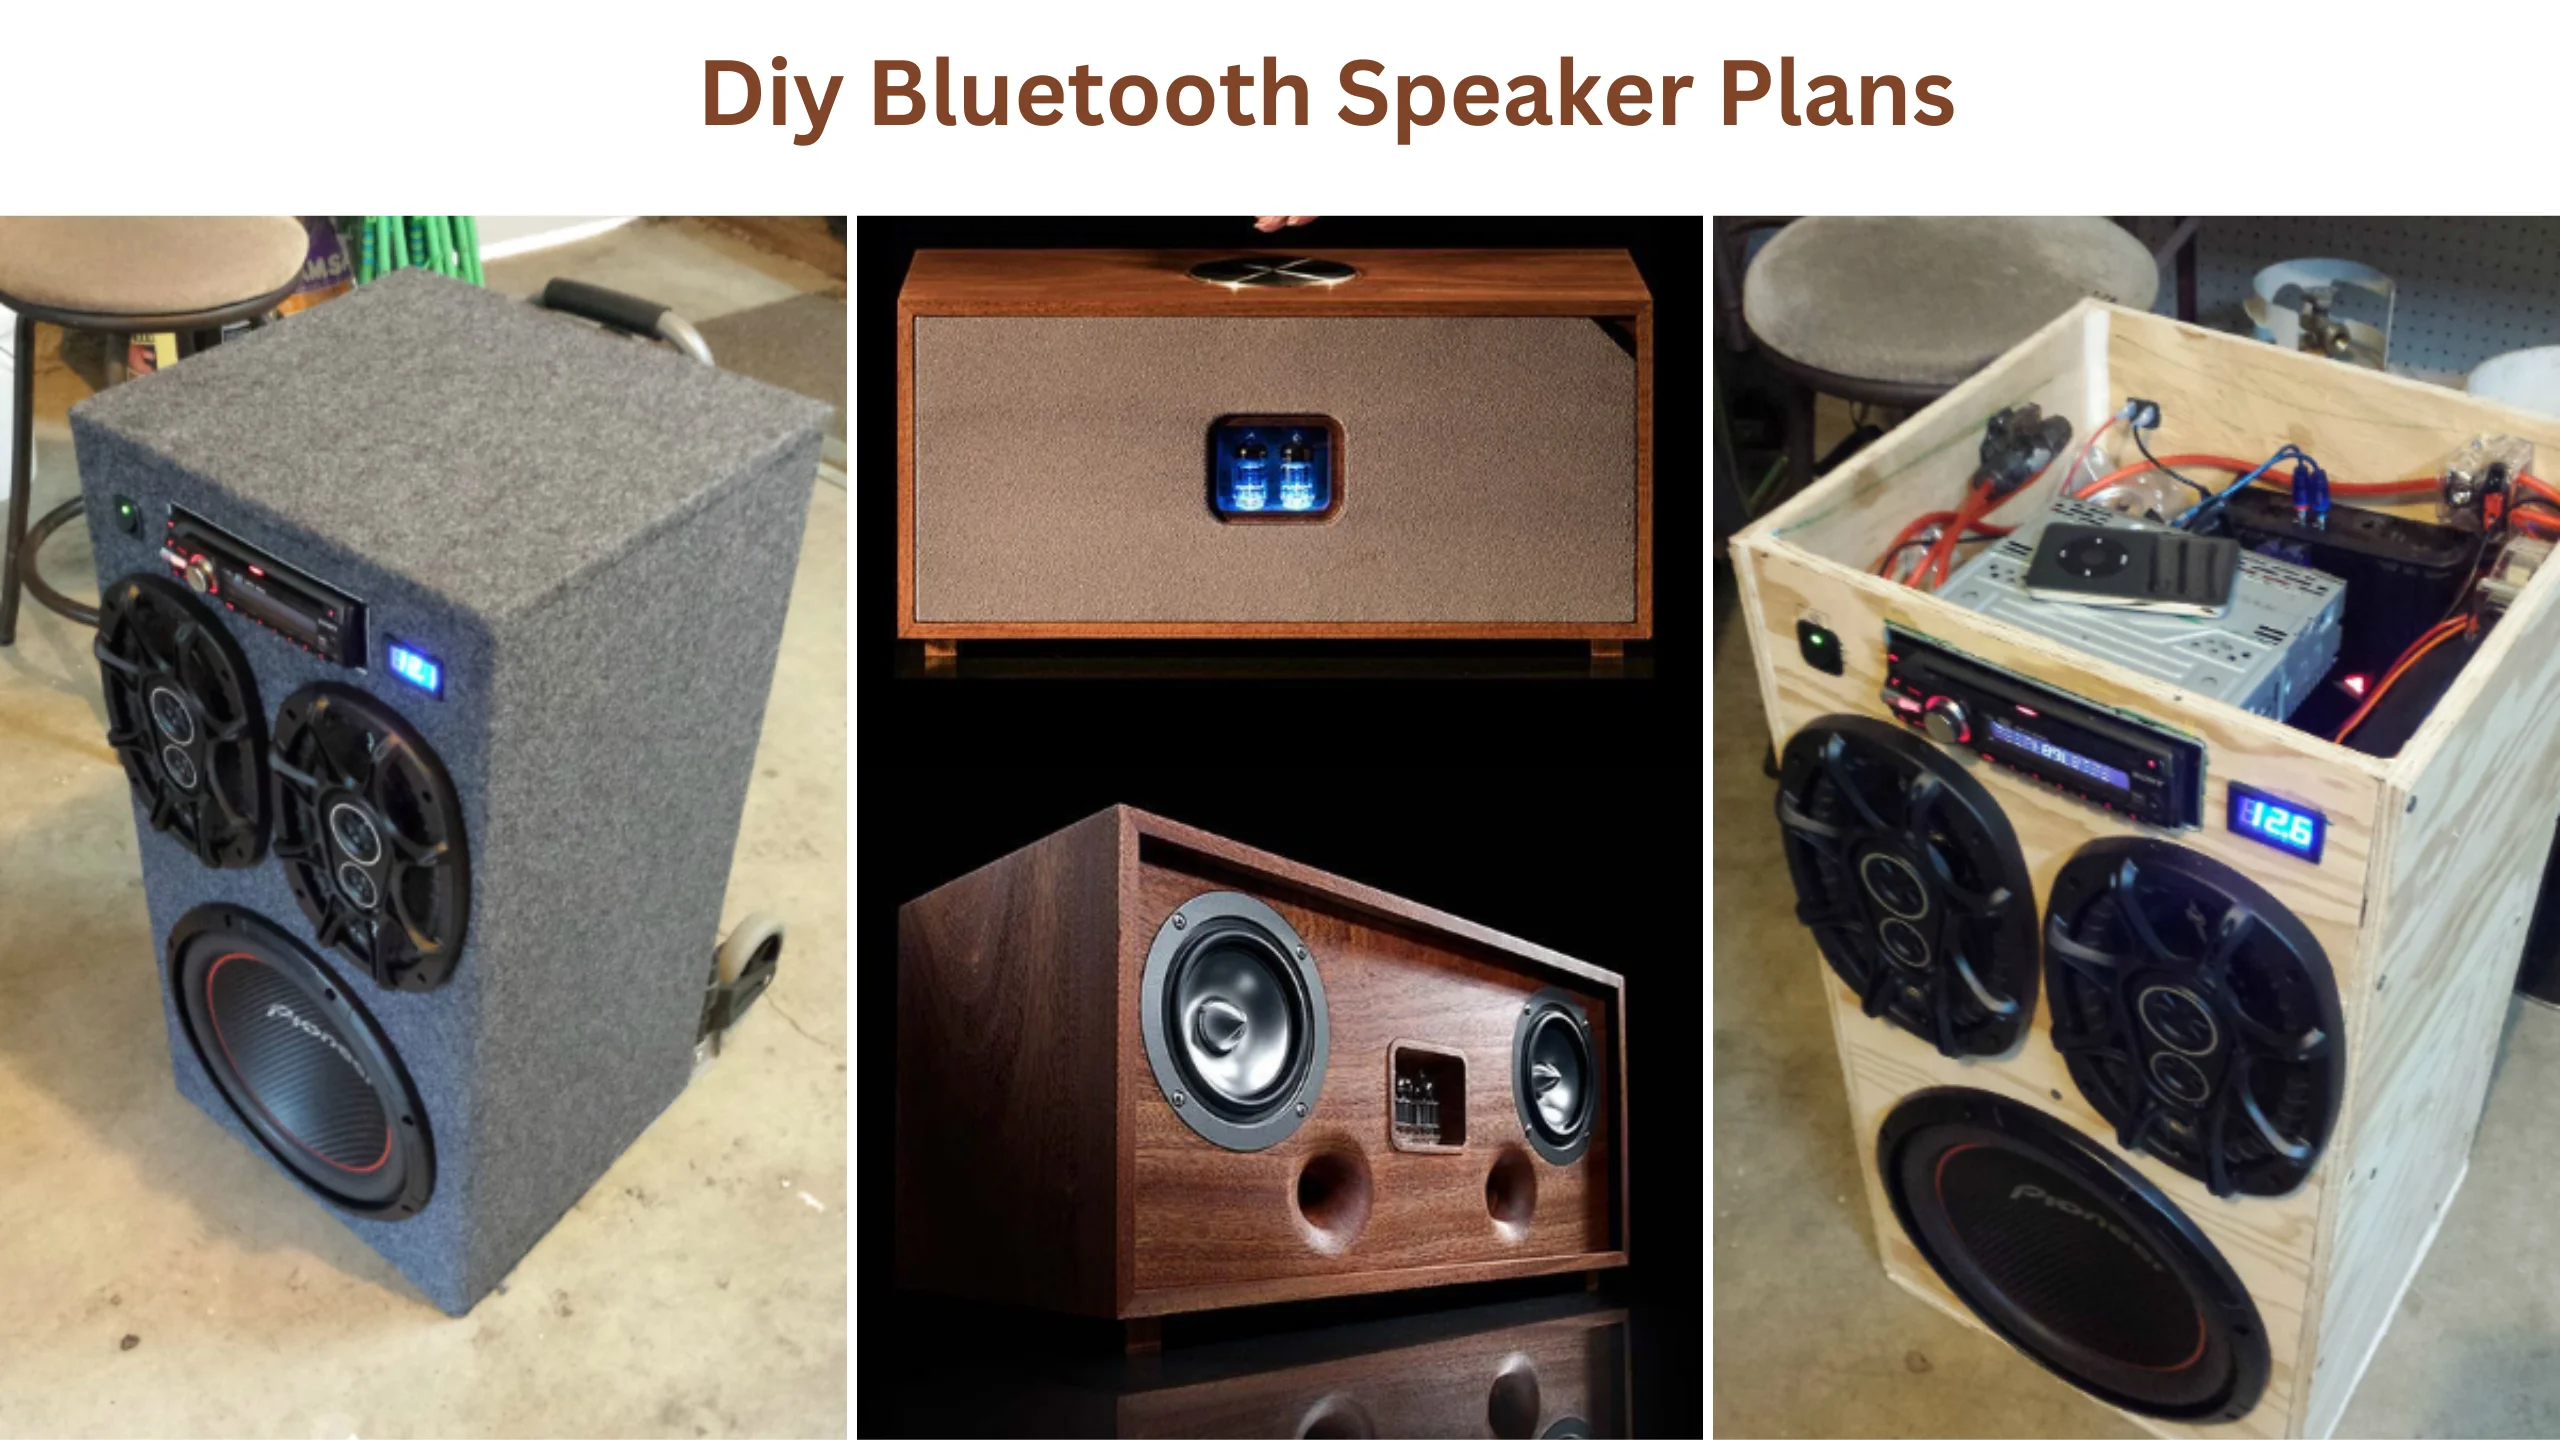 Diy bluetooth speaker plans